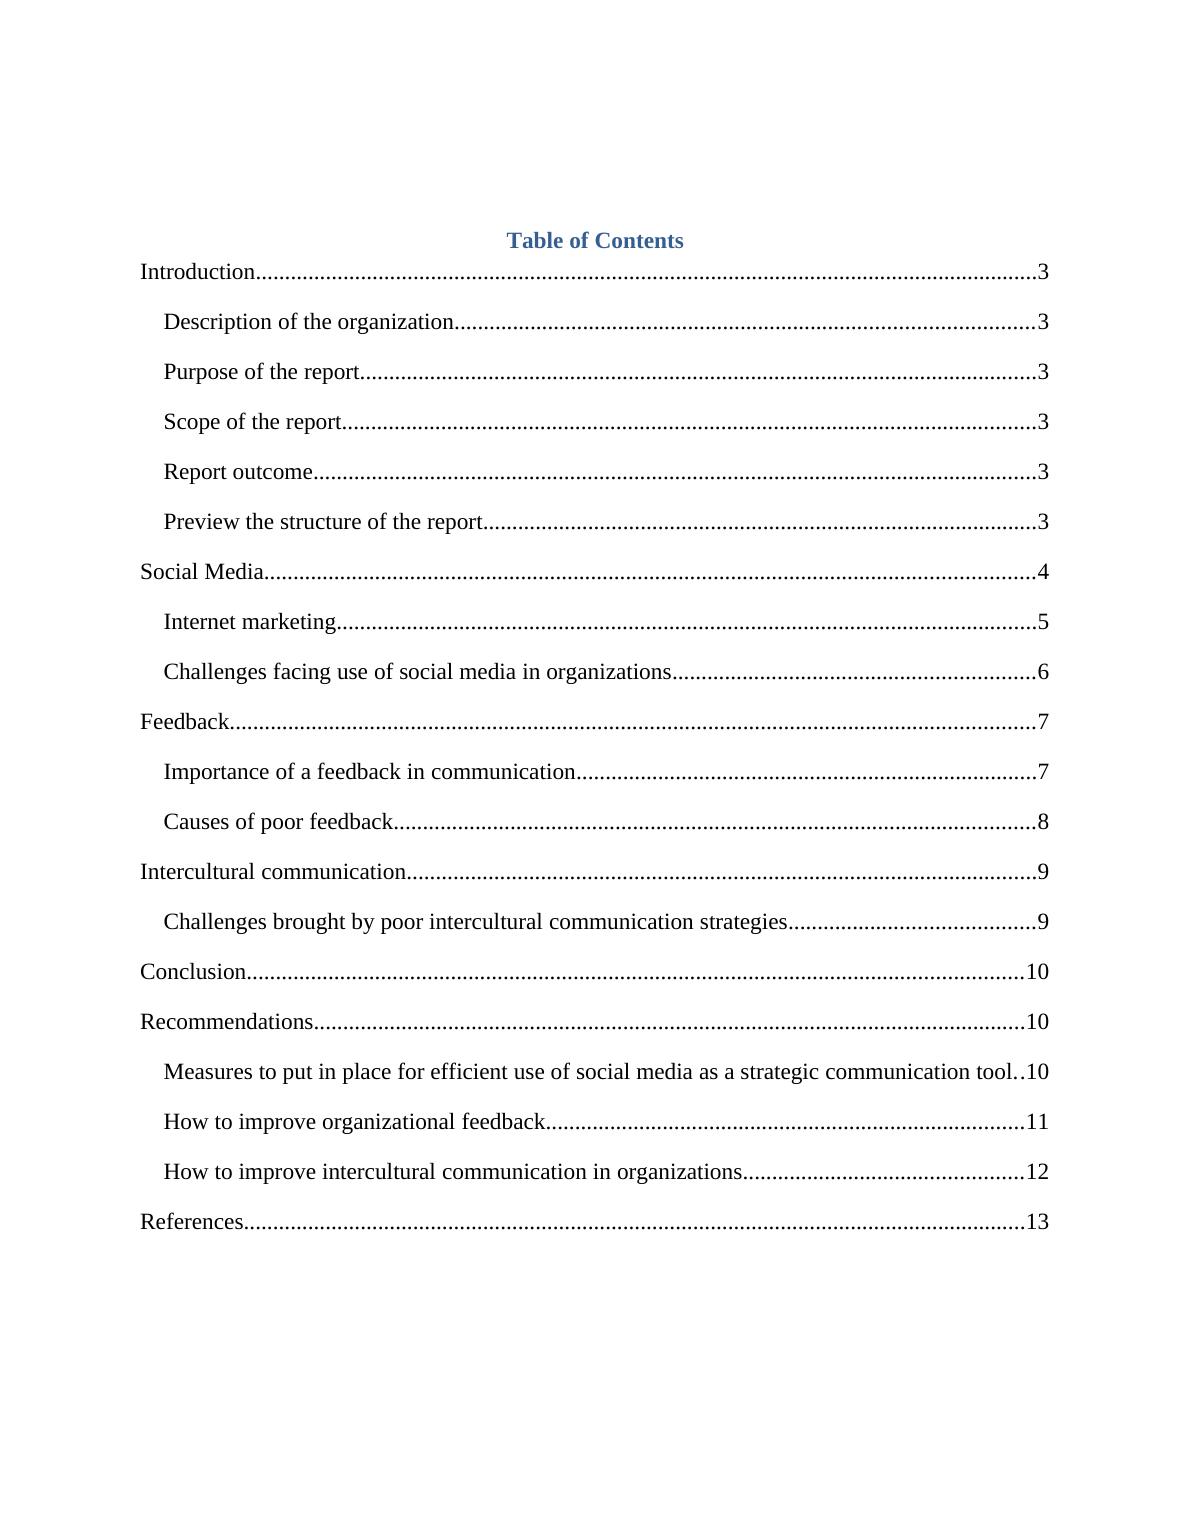 Intercultural communication Assignment PDF_2